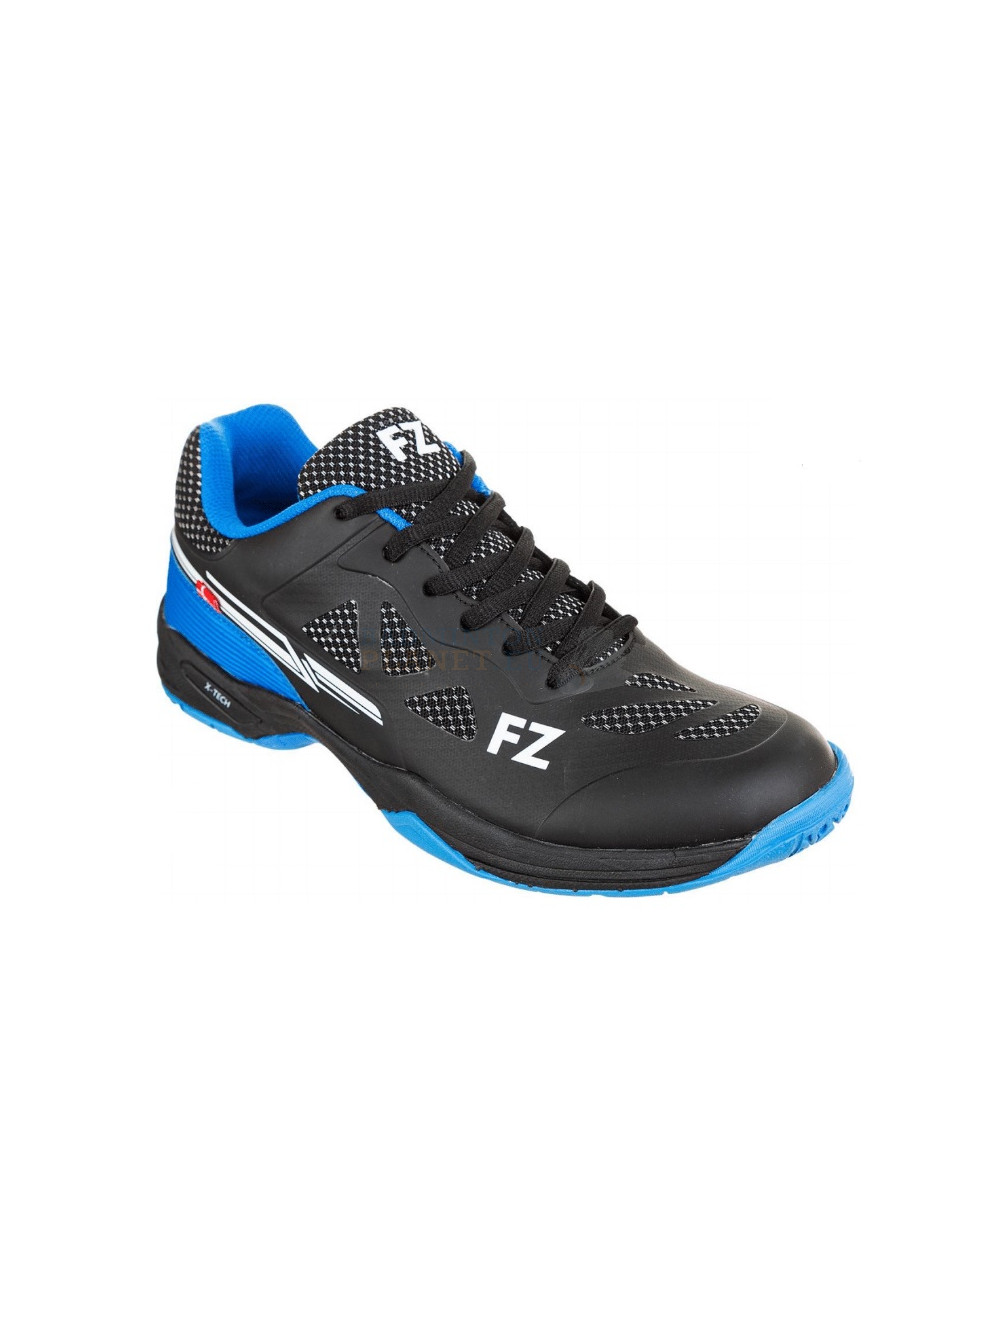 FZ Forza Brace M Black badminton shoe? - Badmintonplanet.eu